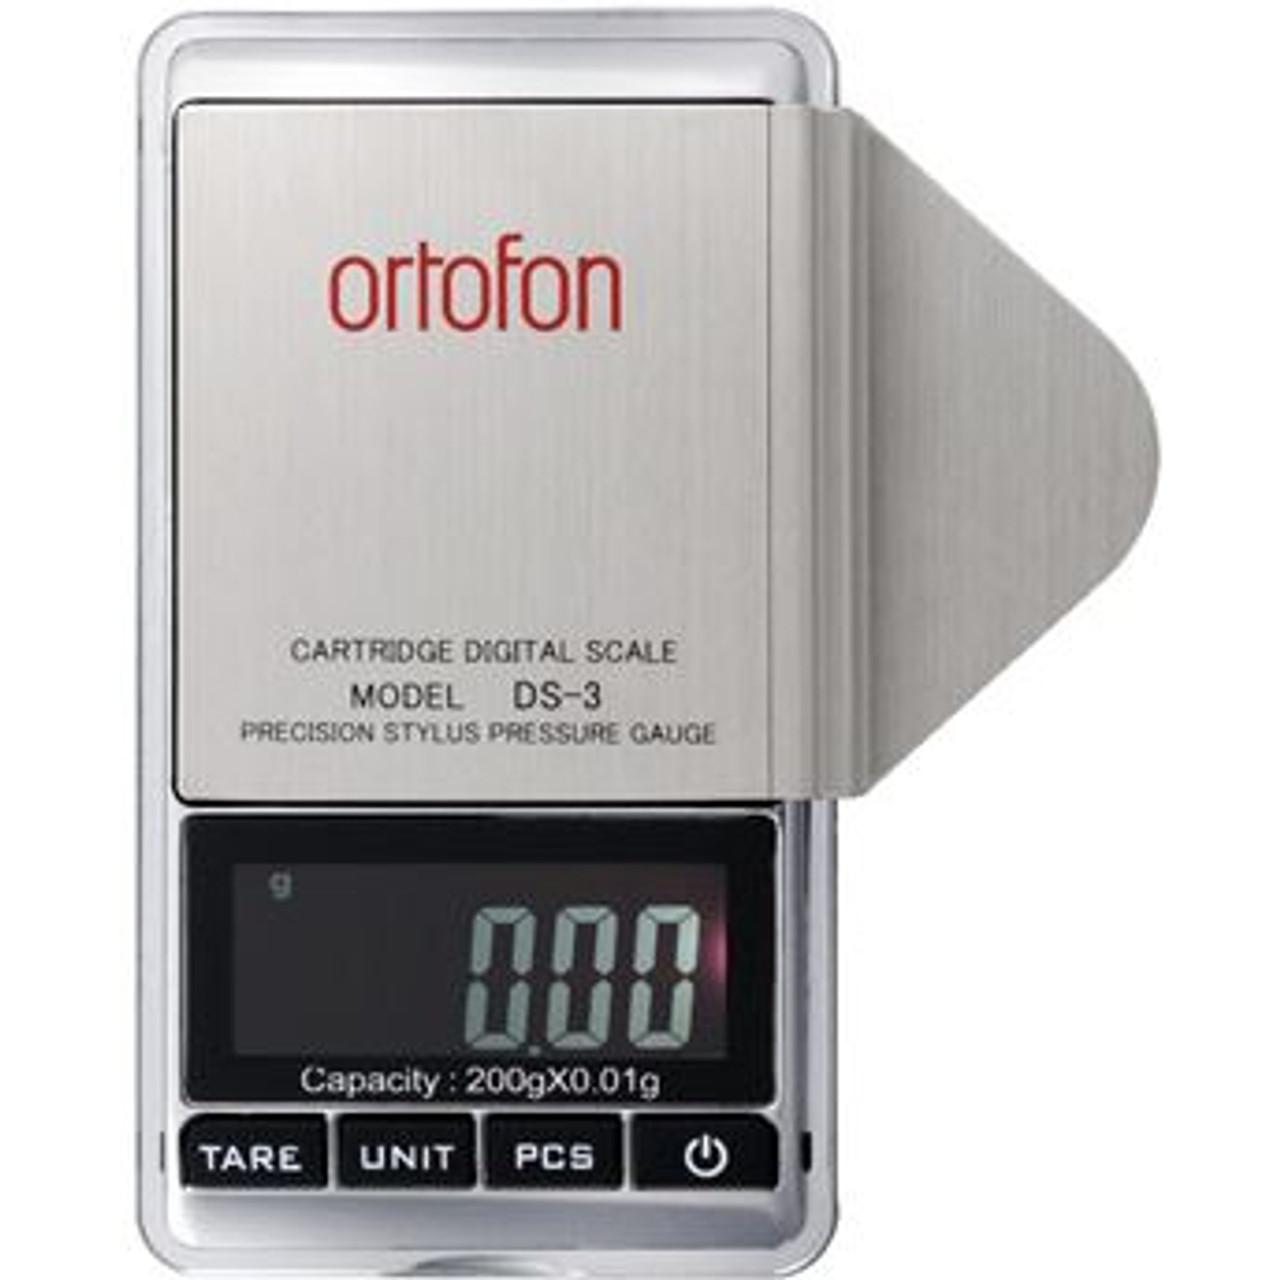 Ortofon DS-3 digital stylus gauge